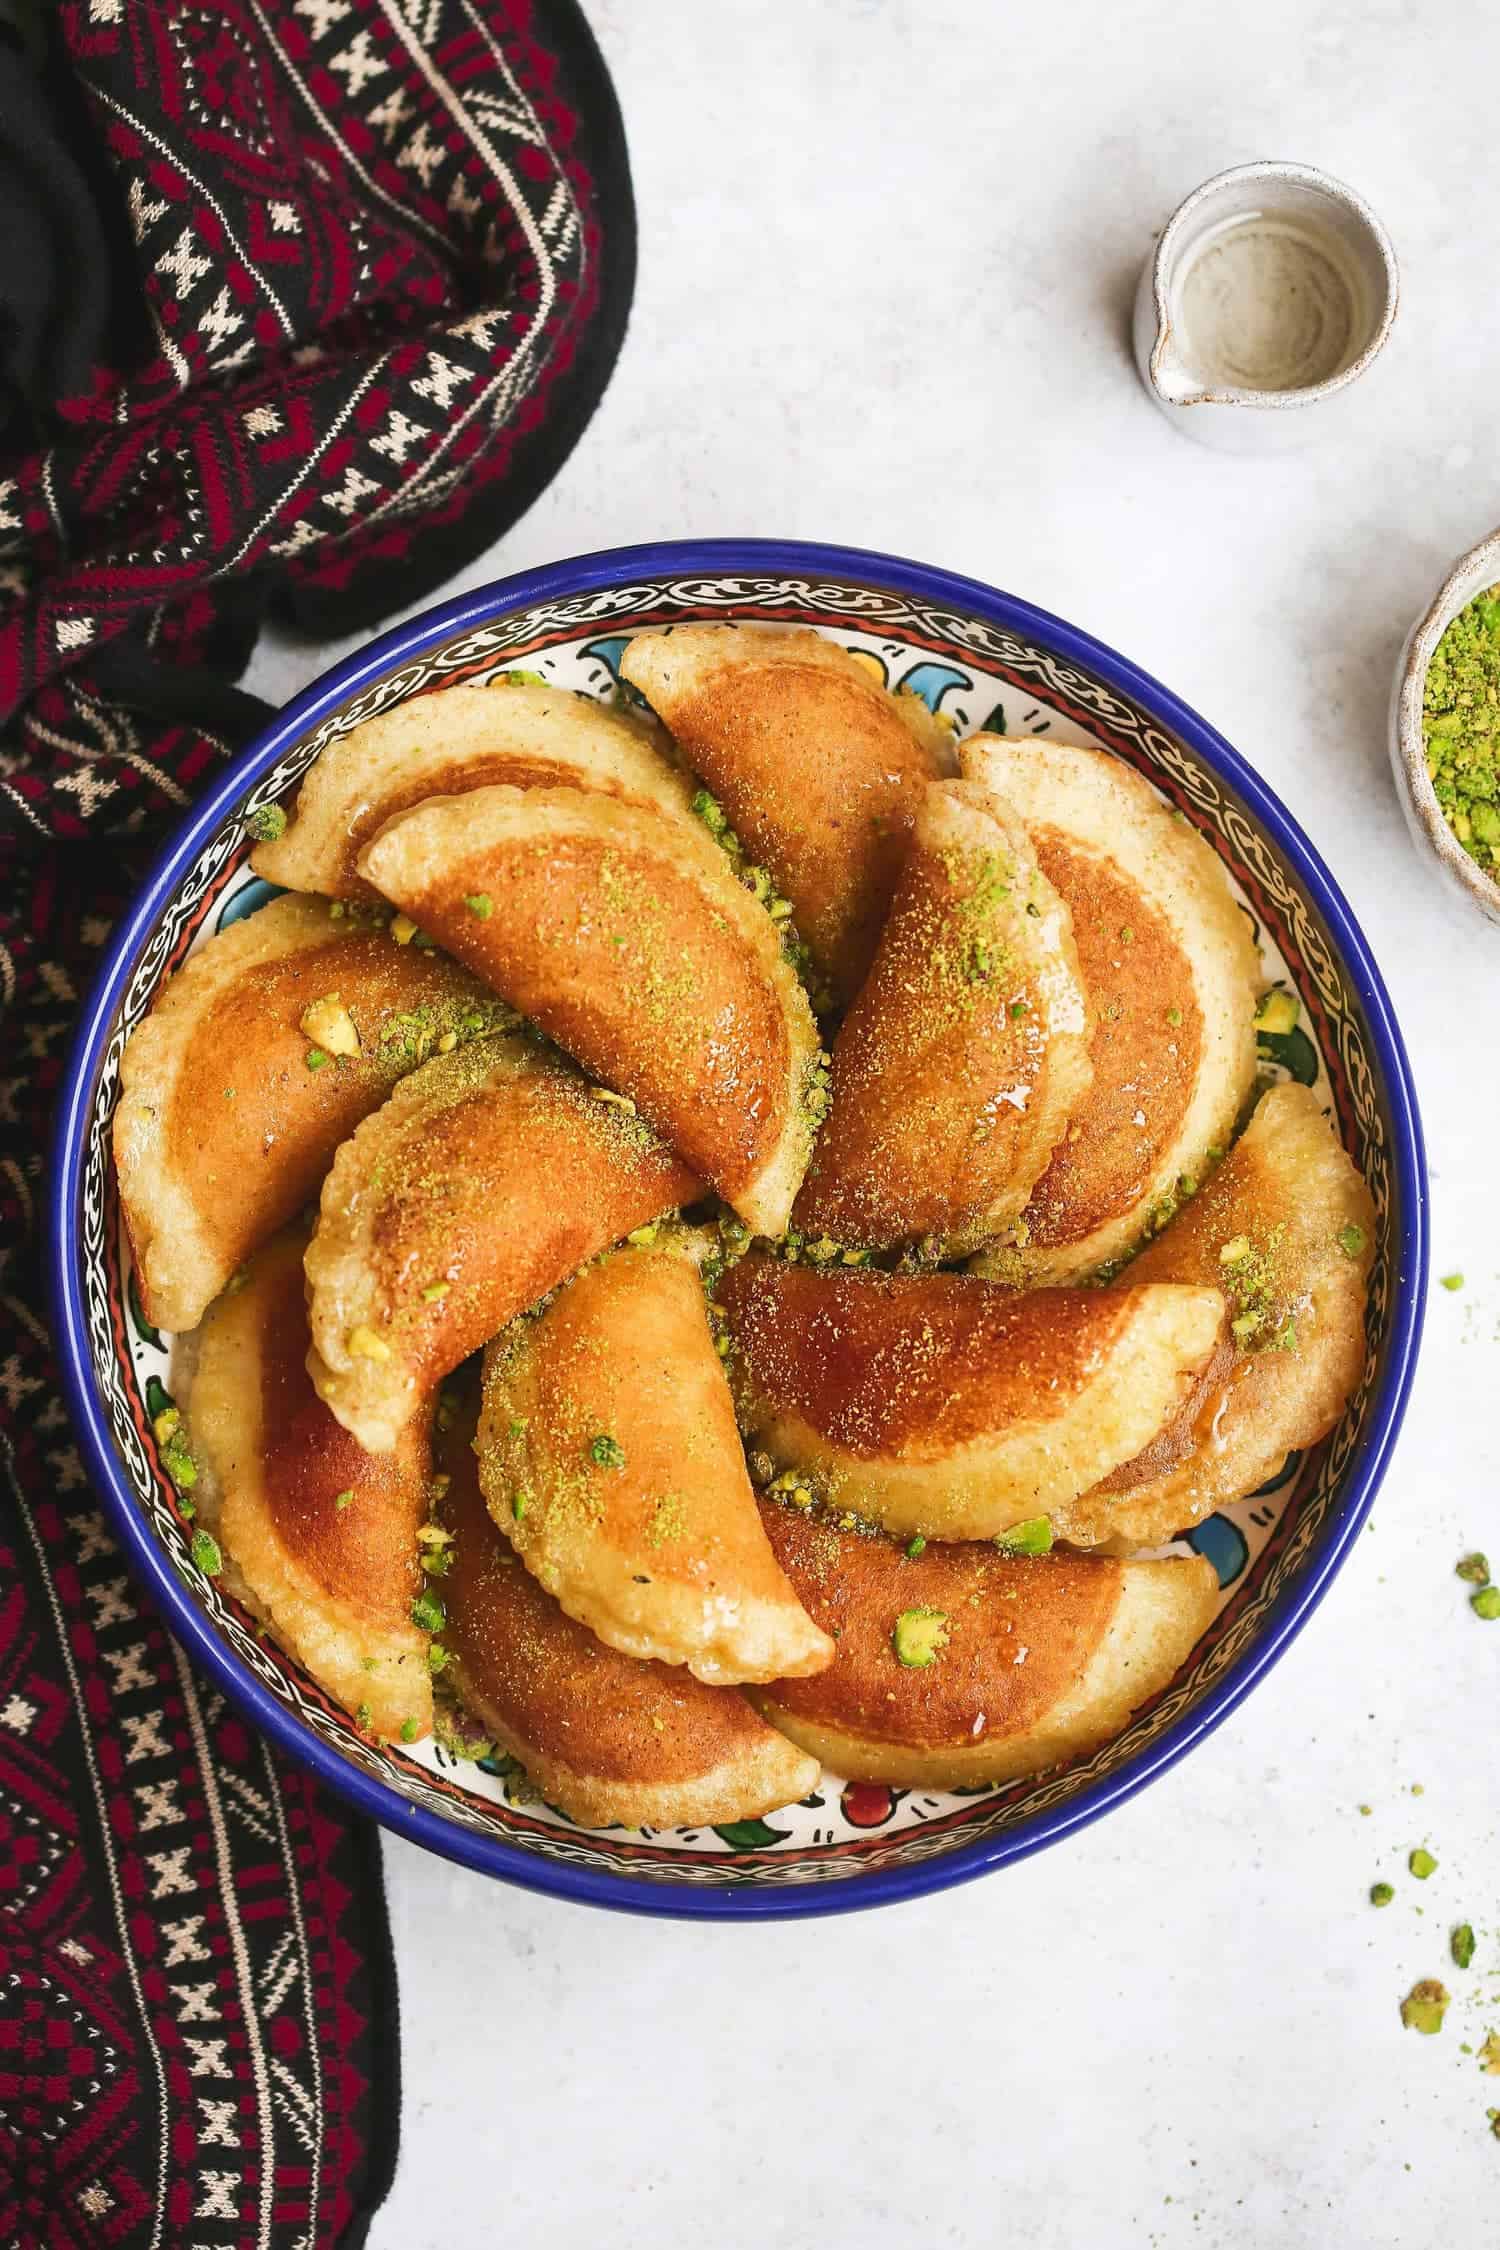 Atayef on a large oriental dish, garnished with ground pistachio